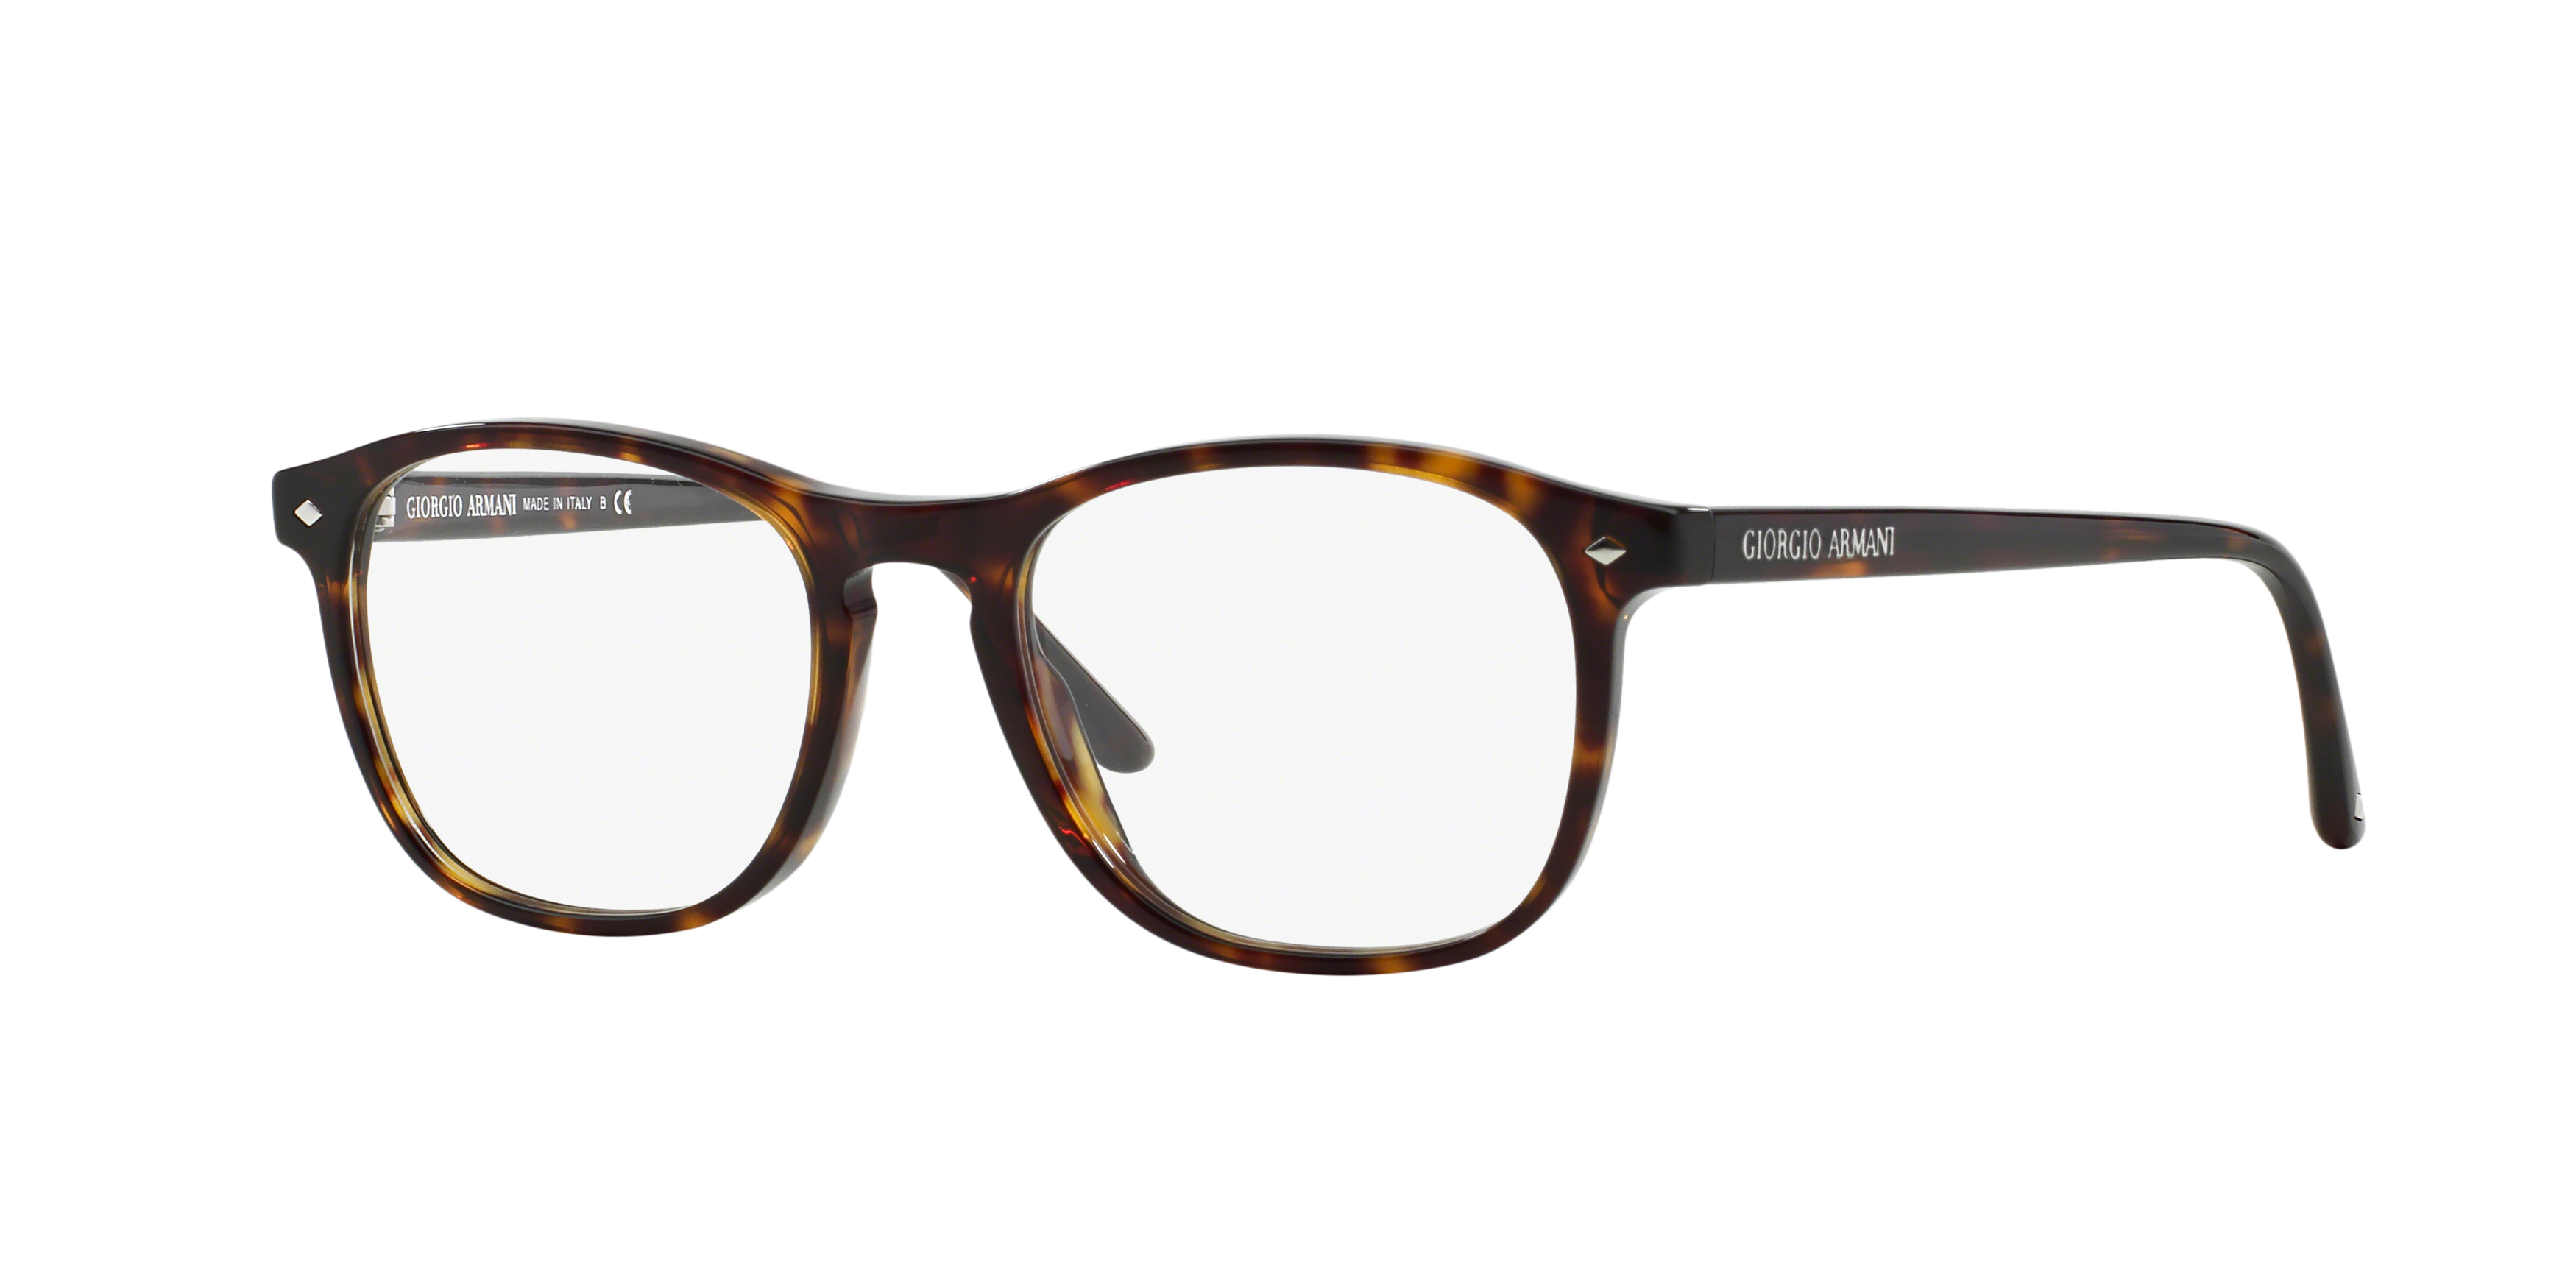 Angle_Left01 Giorgio Armani AR 7003 Glasses Transparent / Tortoise Shell